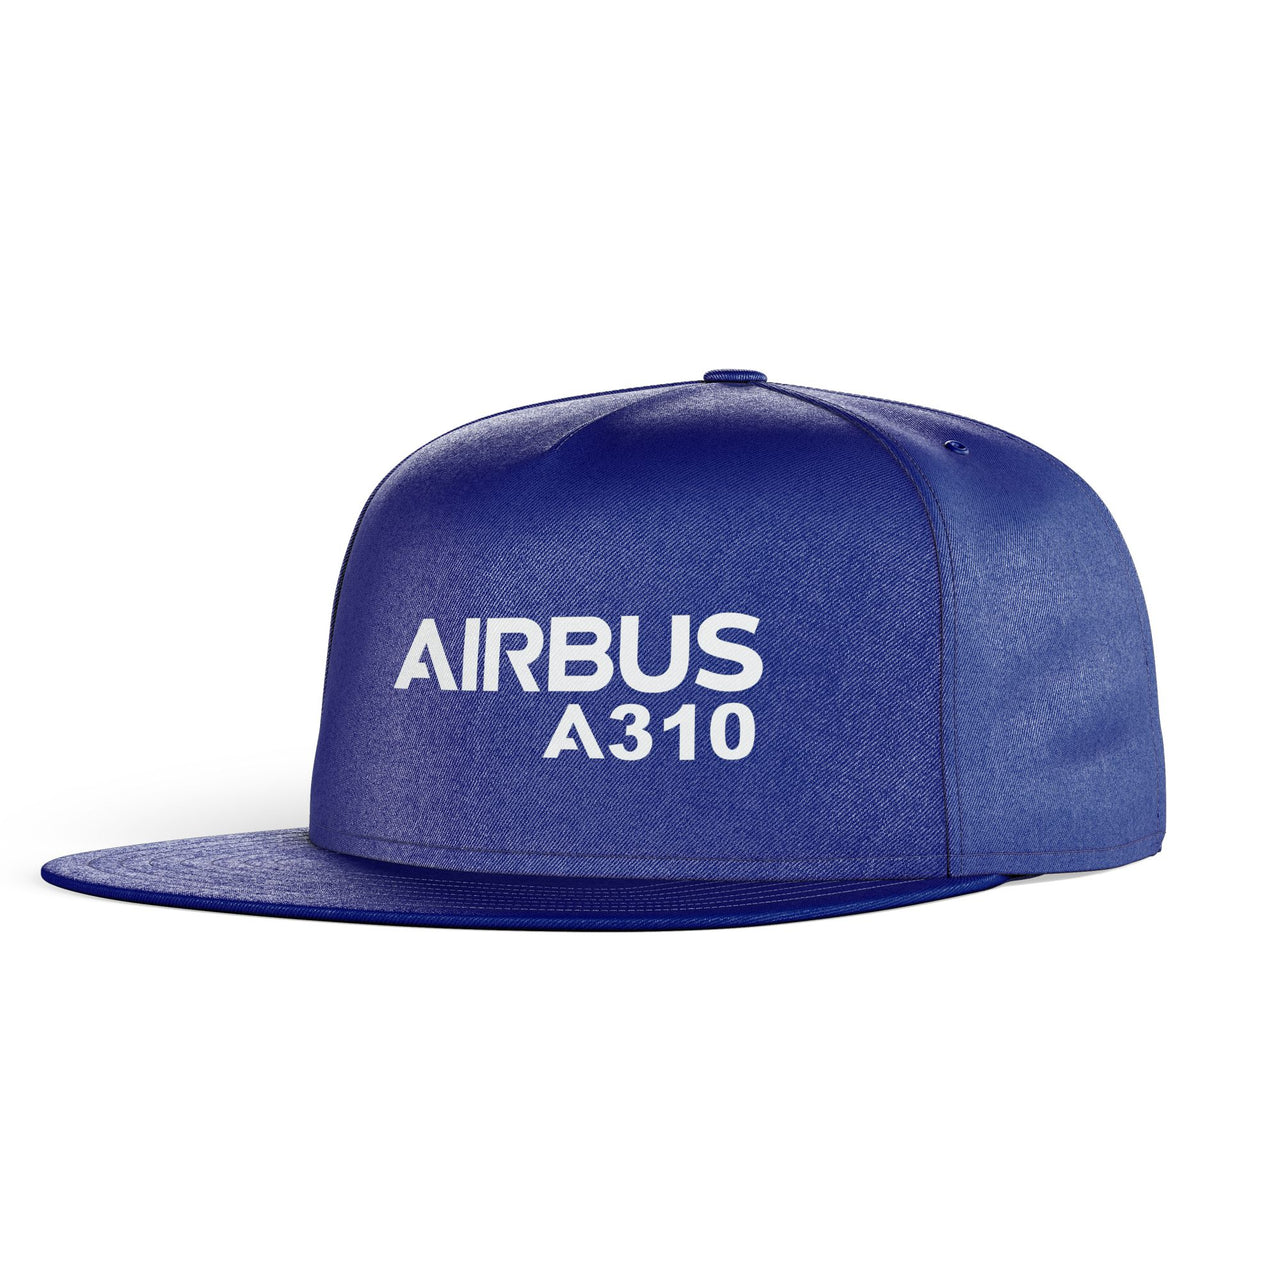 Airbus A310 & Text Designed Snapback Caps & Hats